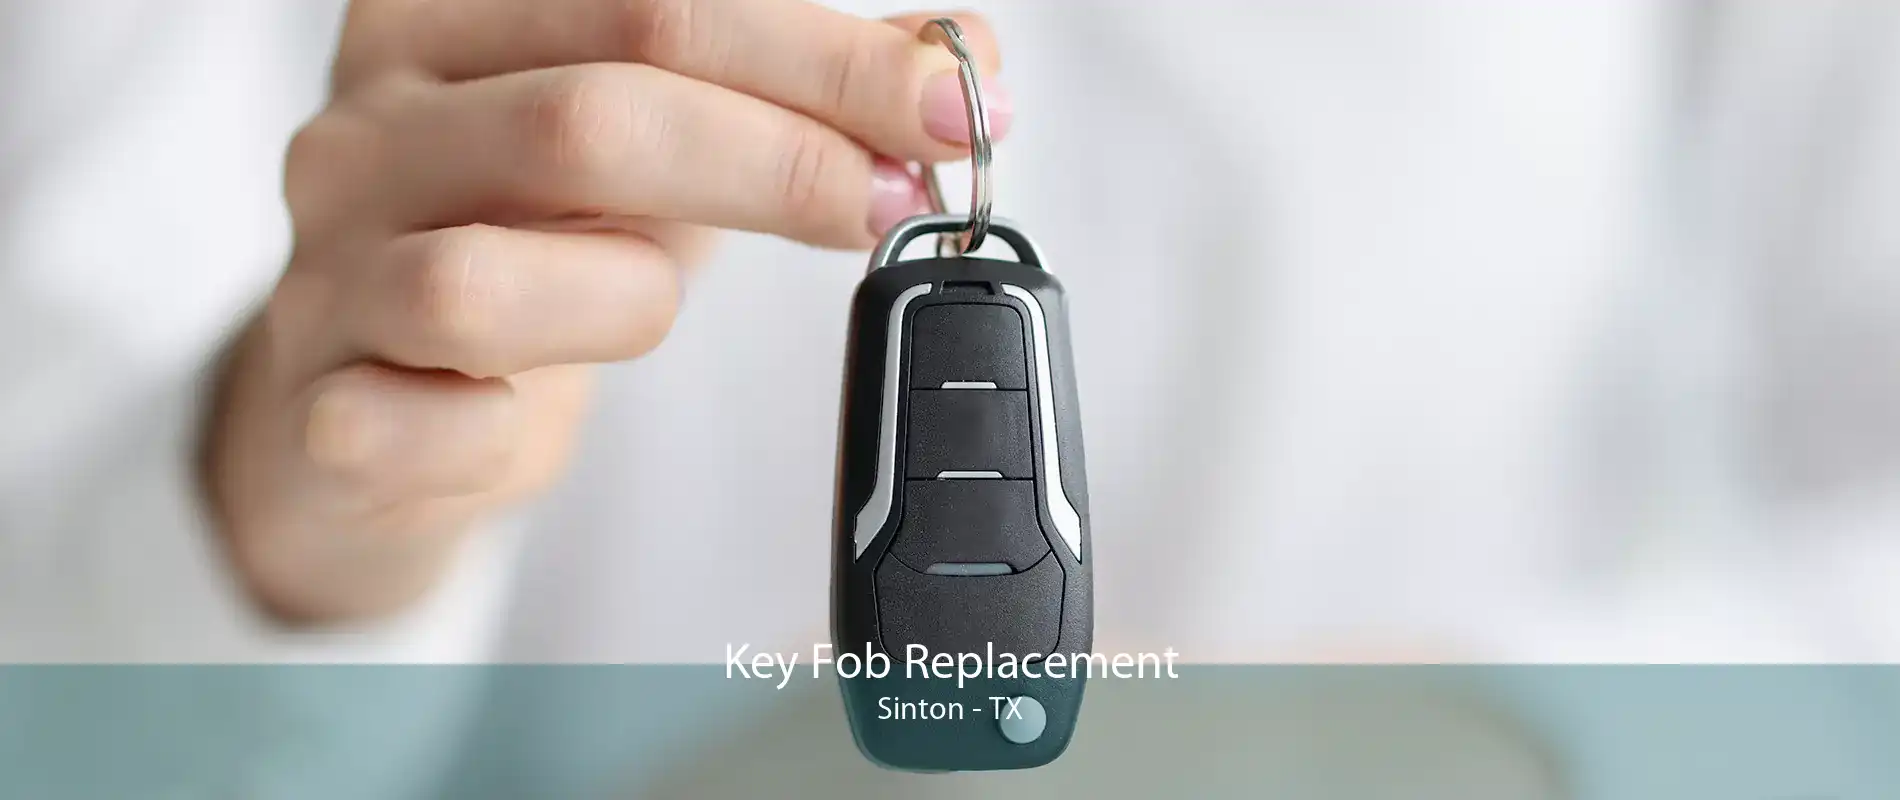 Key Fob Replacement Sinton - TX